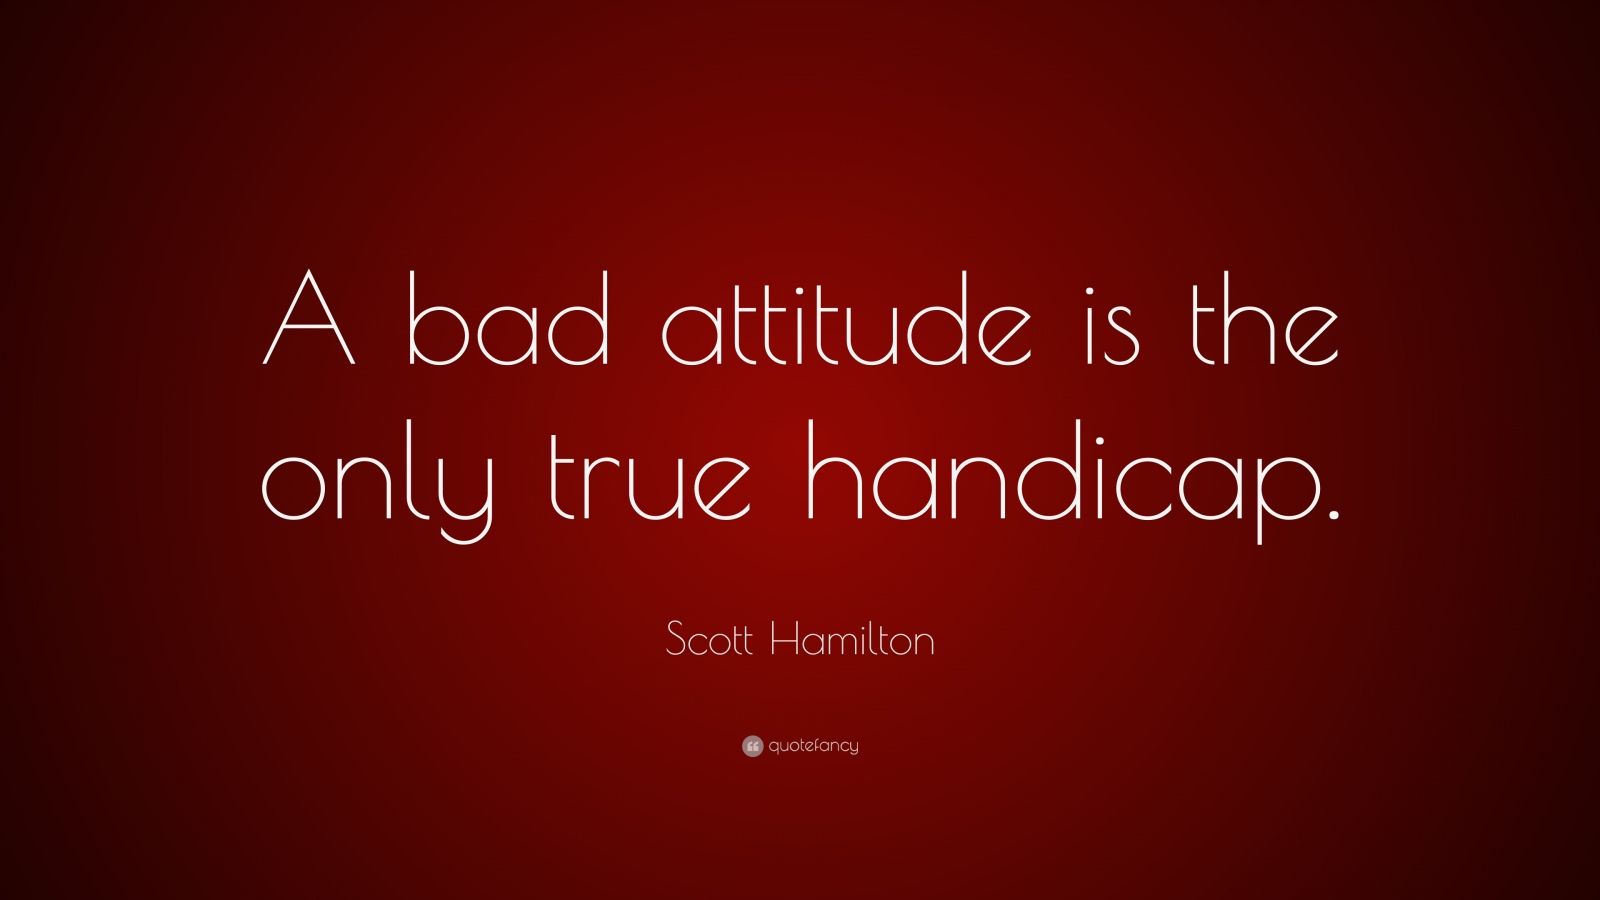 Scott Hamilton Quote: “A bad attitude is the only true handicap.” (7 wallpaper)